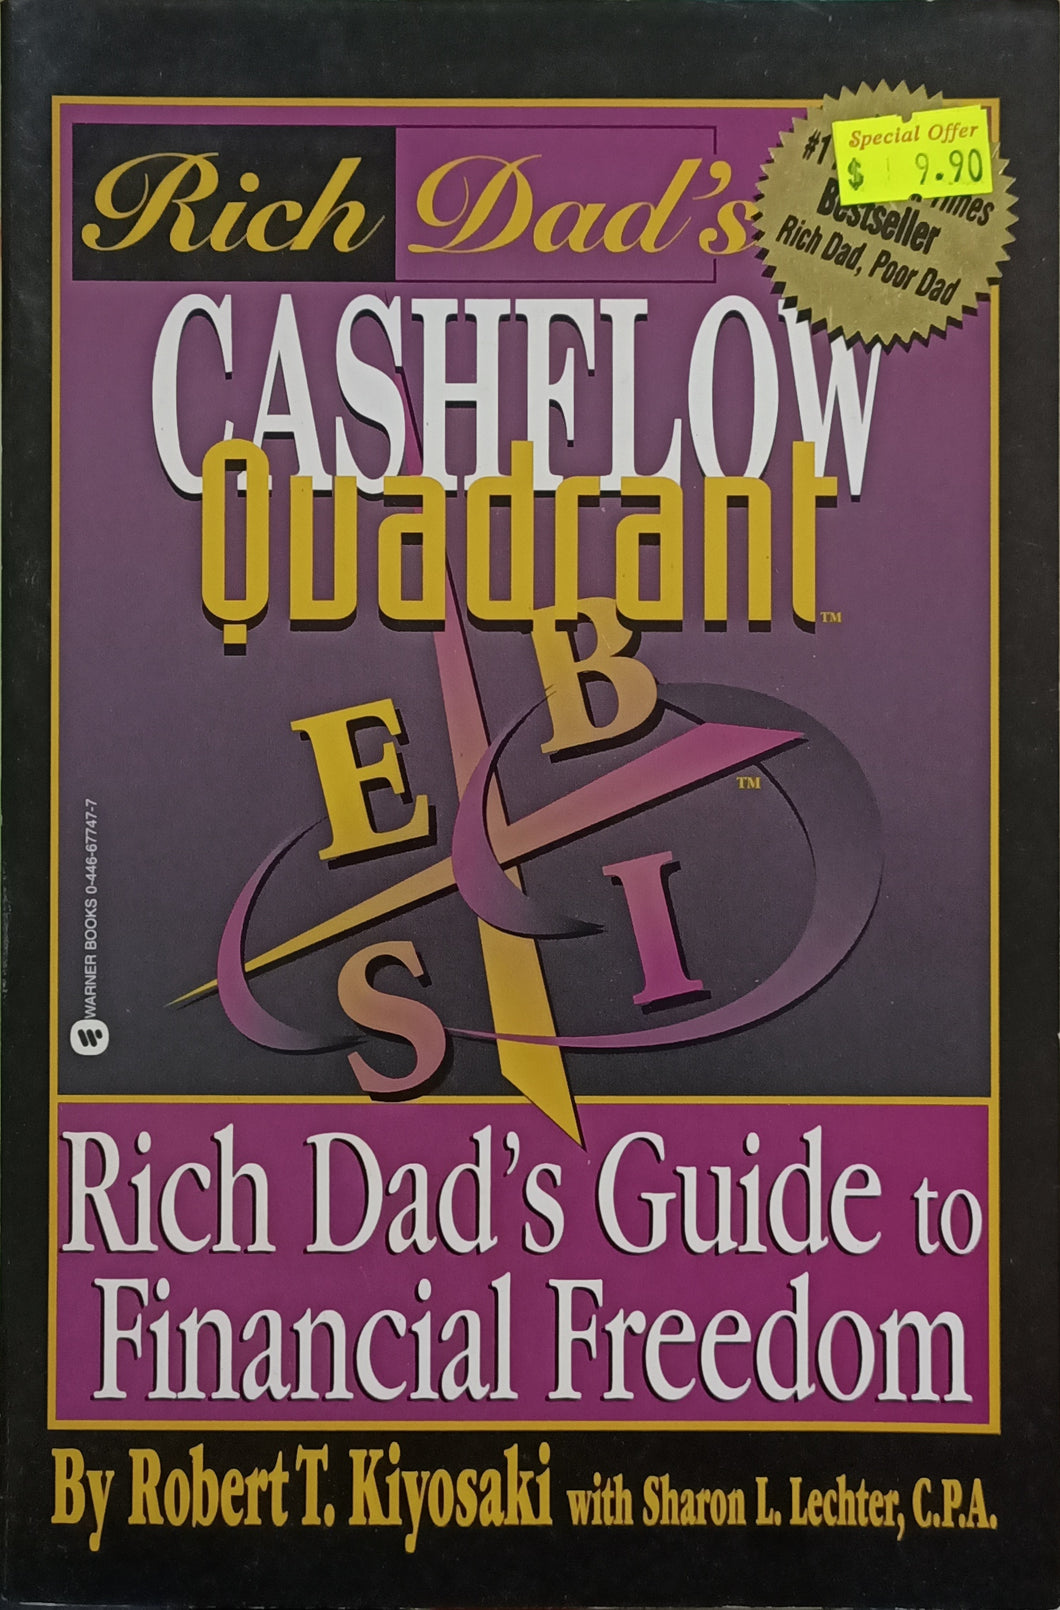 Rich Dad's Cash Flow Quadrant - Robert T. Kiyosaki